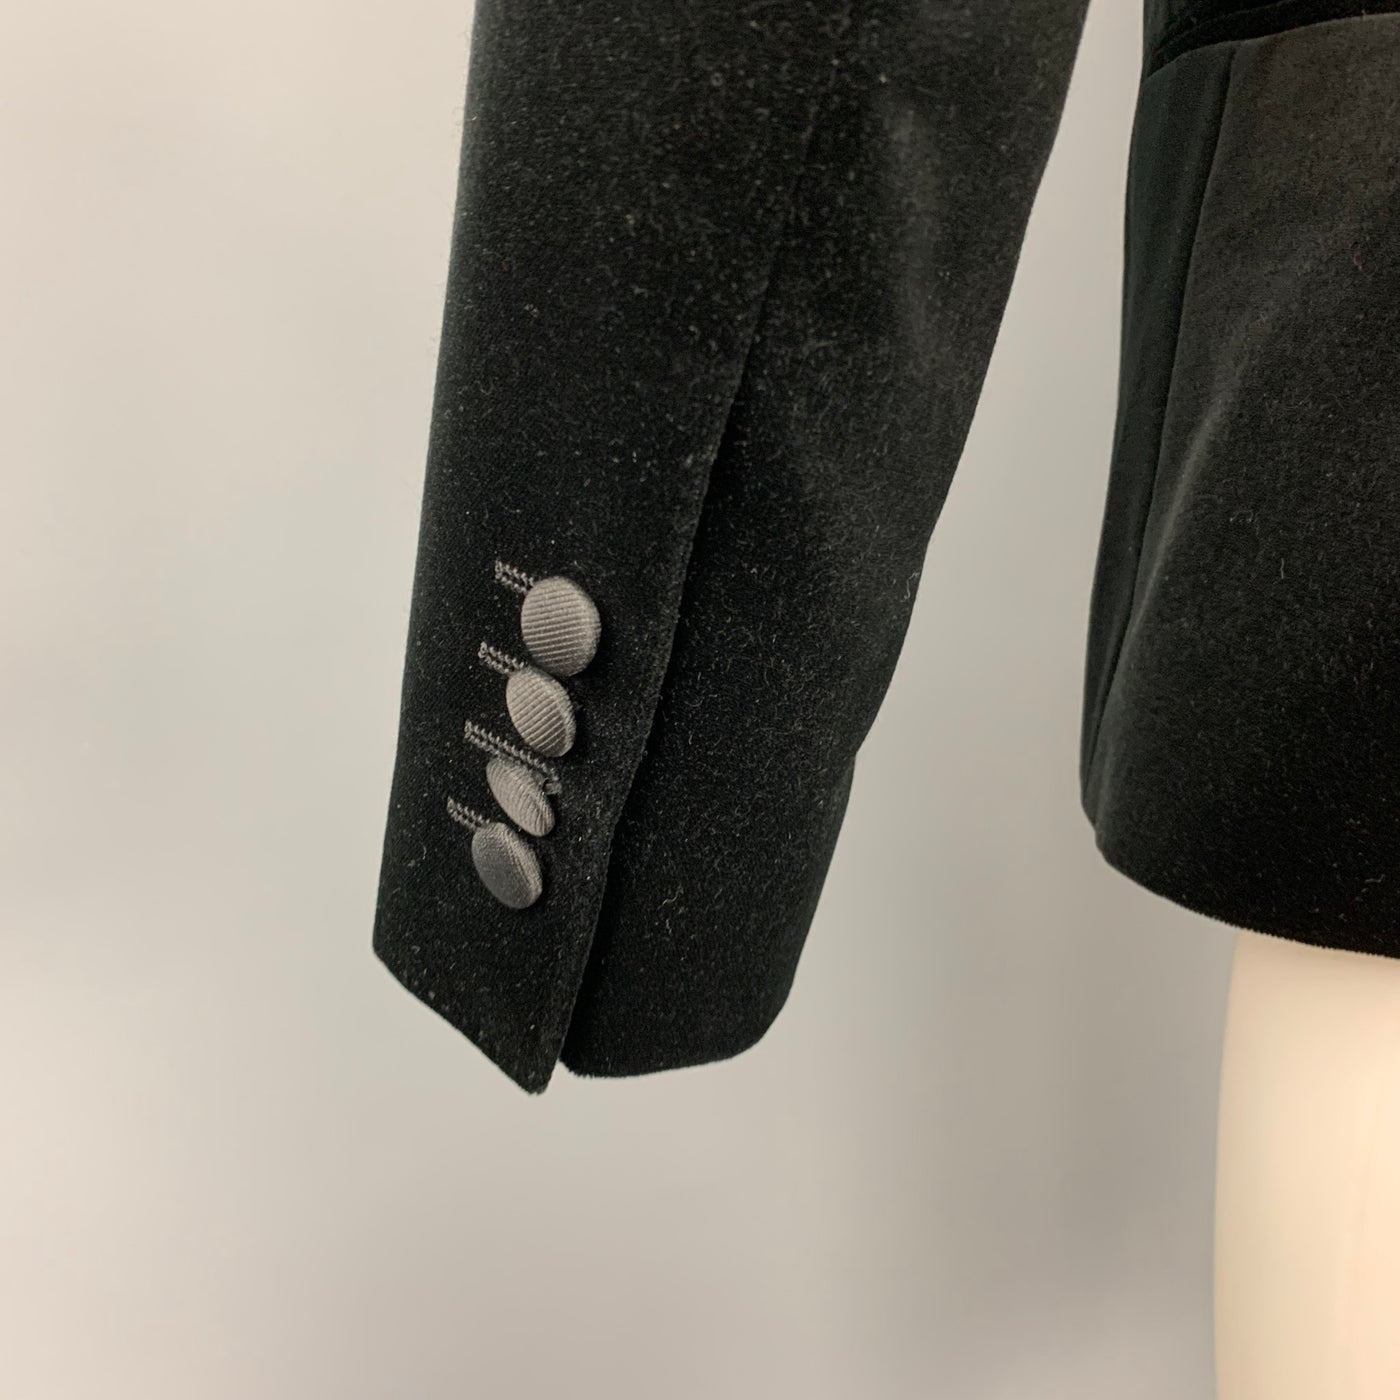 DOLCE & GABBANA Size 40 Black Cotton Velvet Notch Lapel Sport Coat